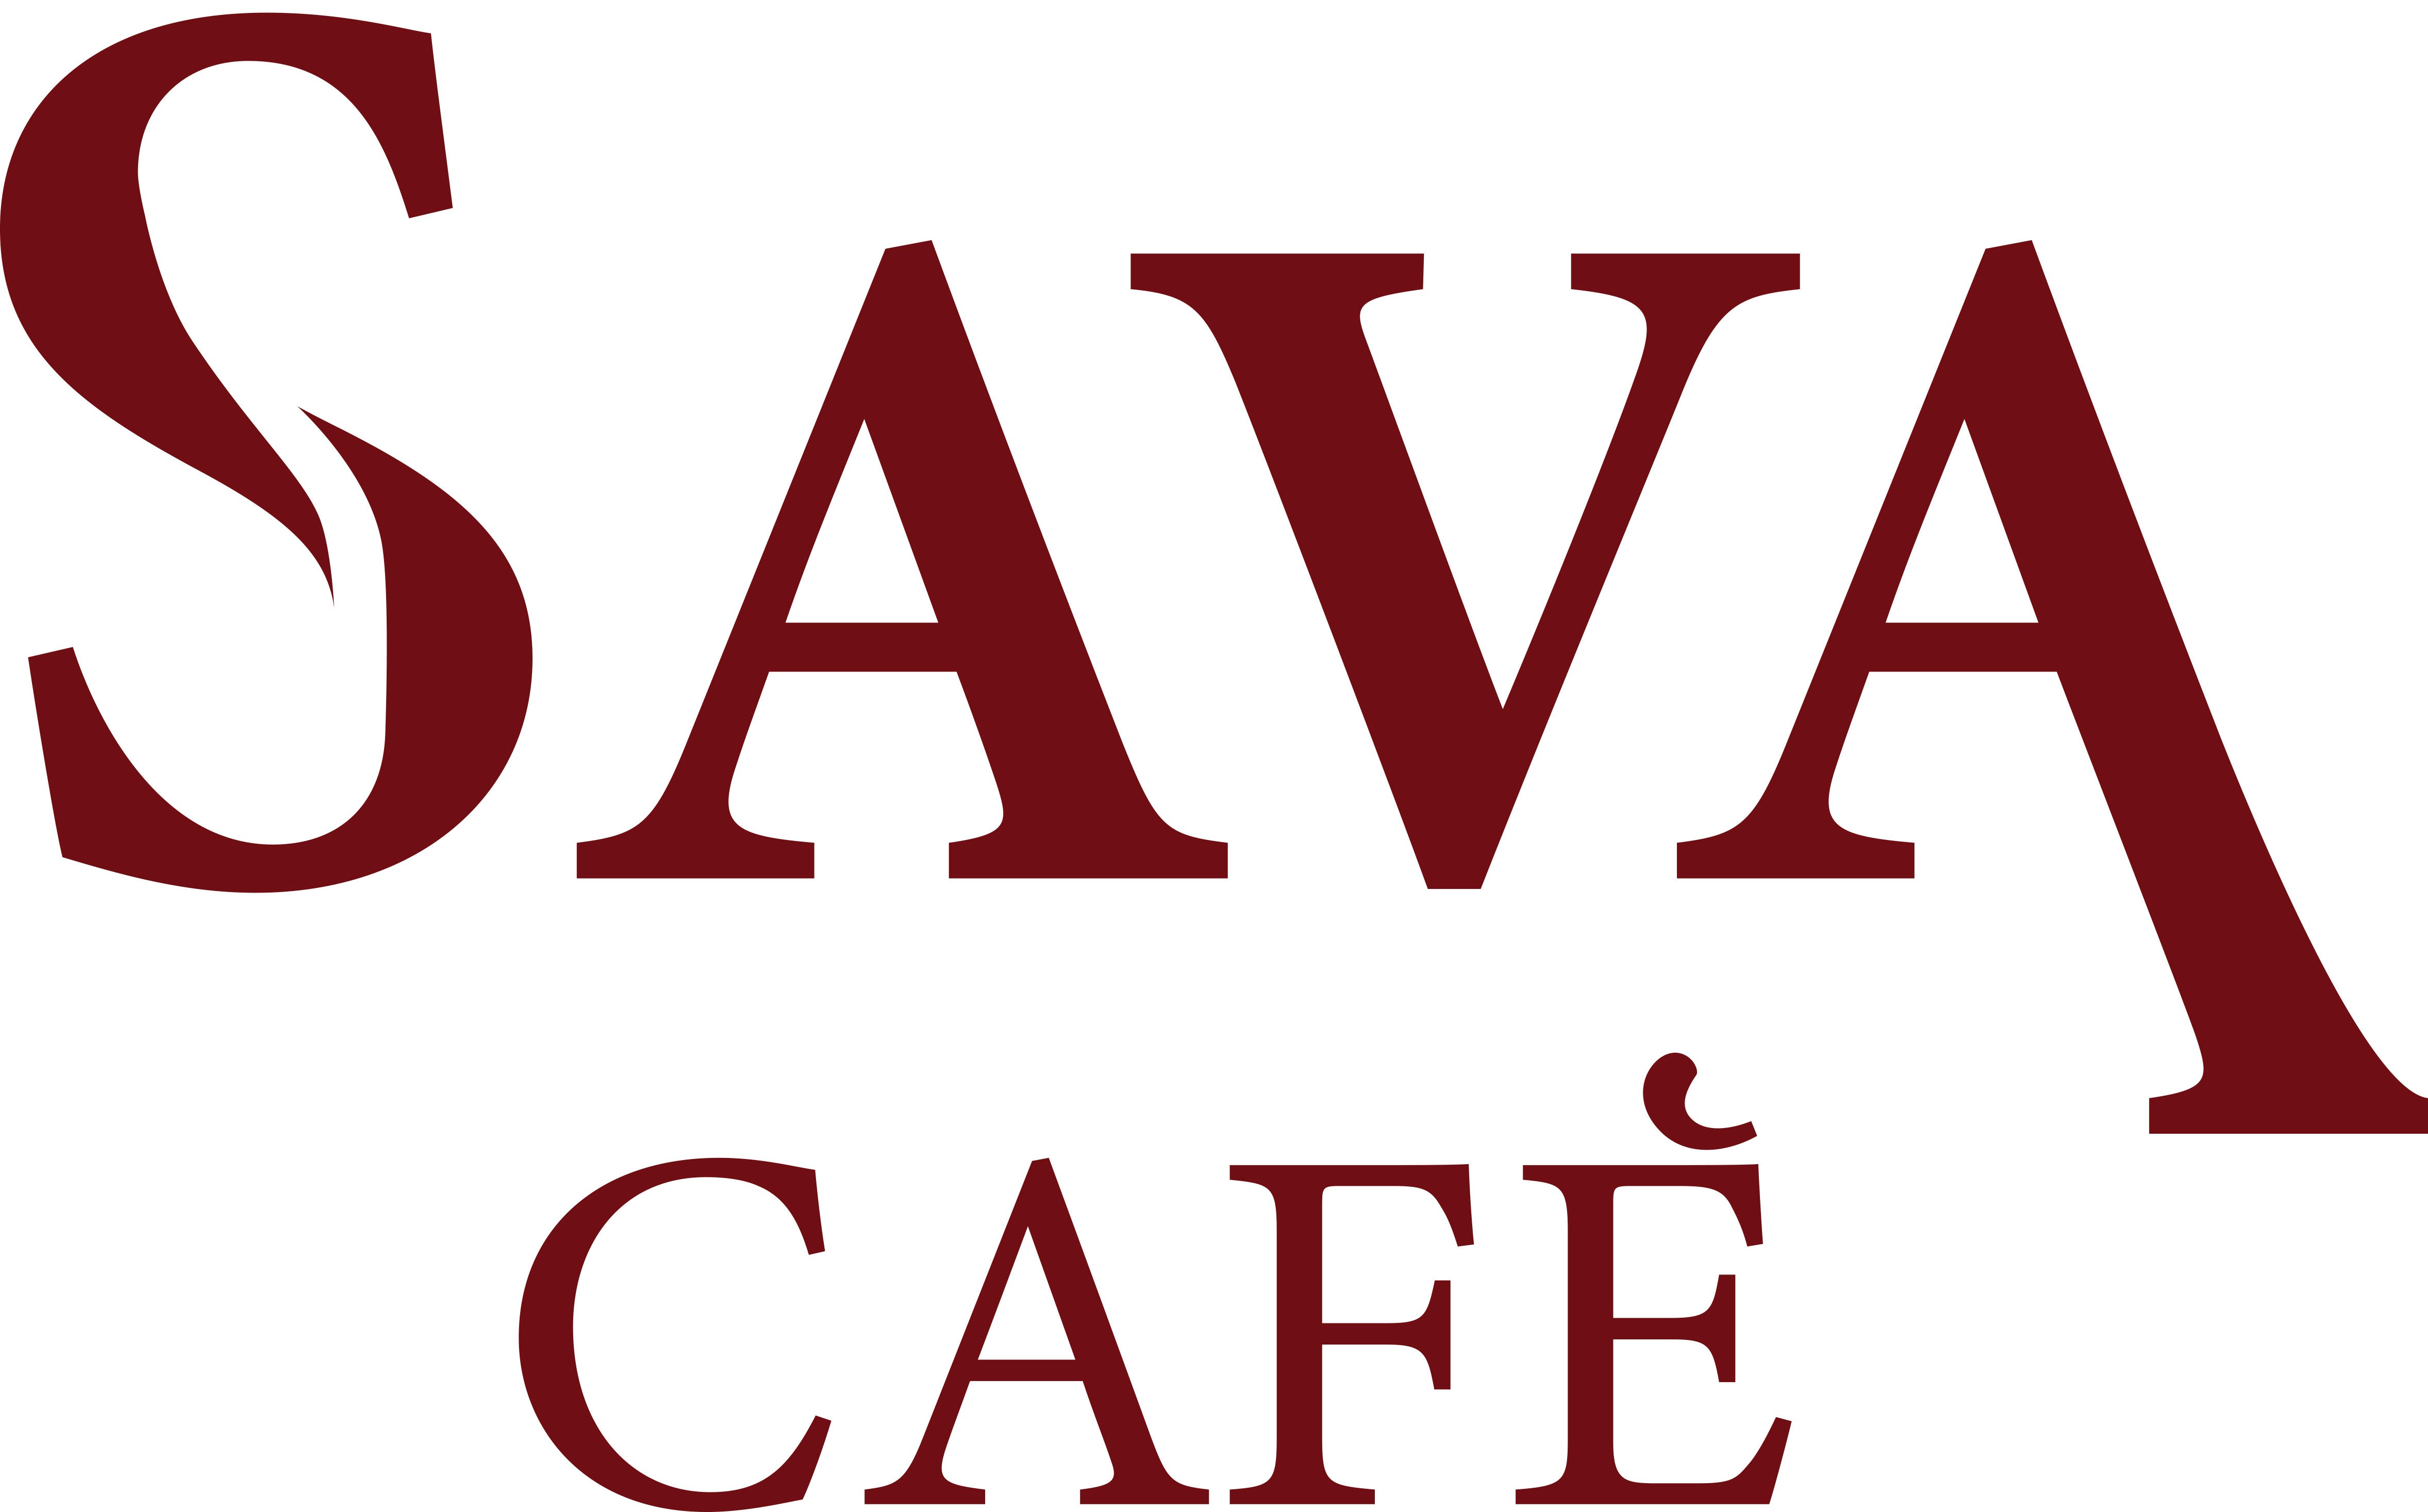 Sava Cafè